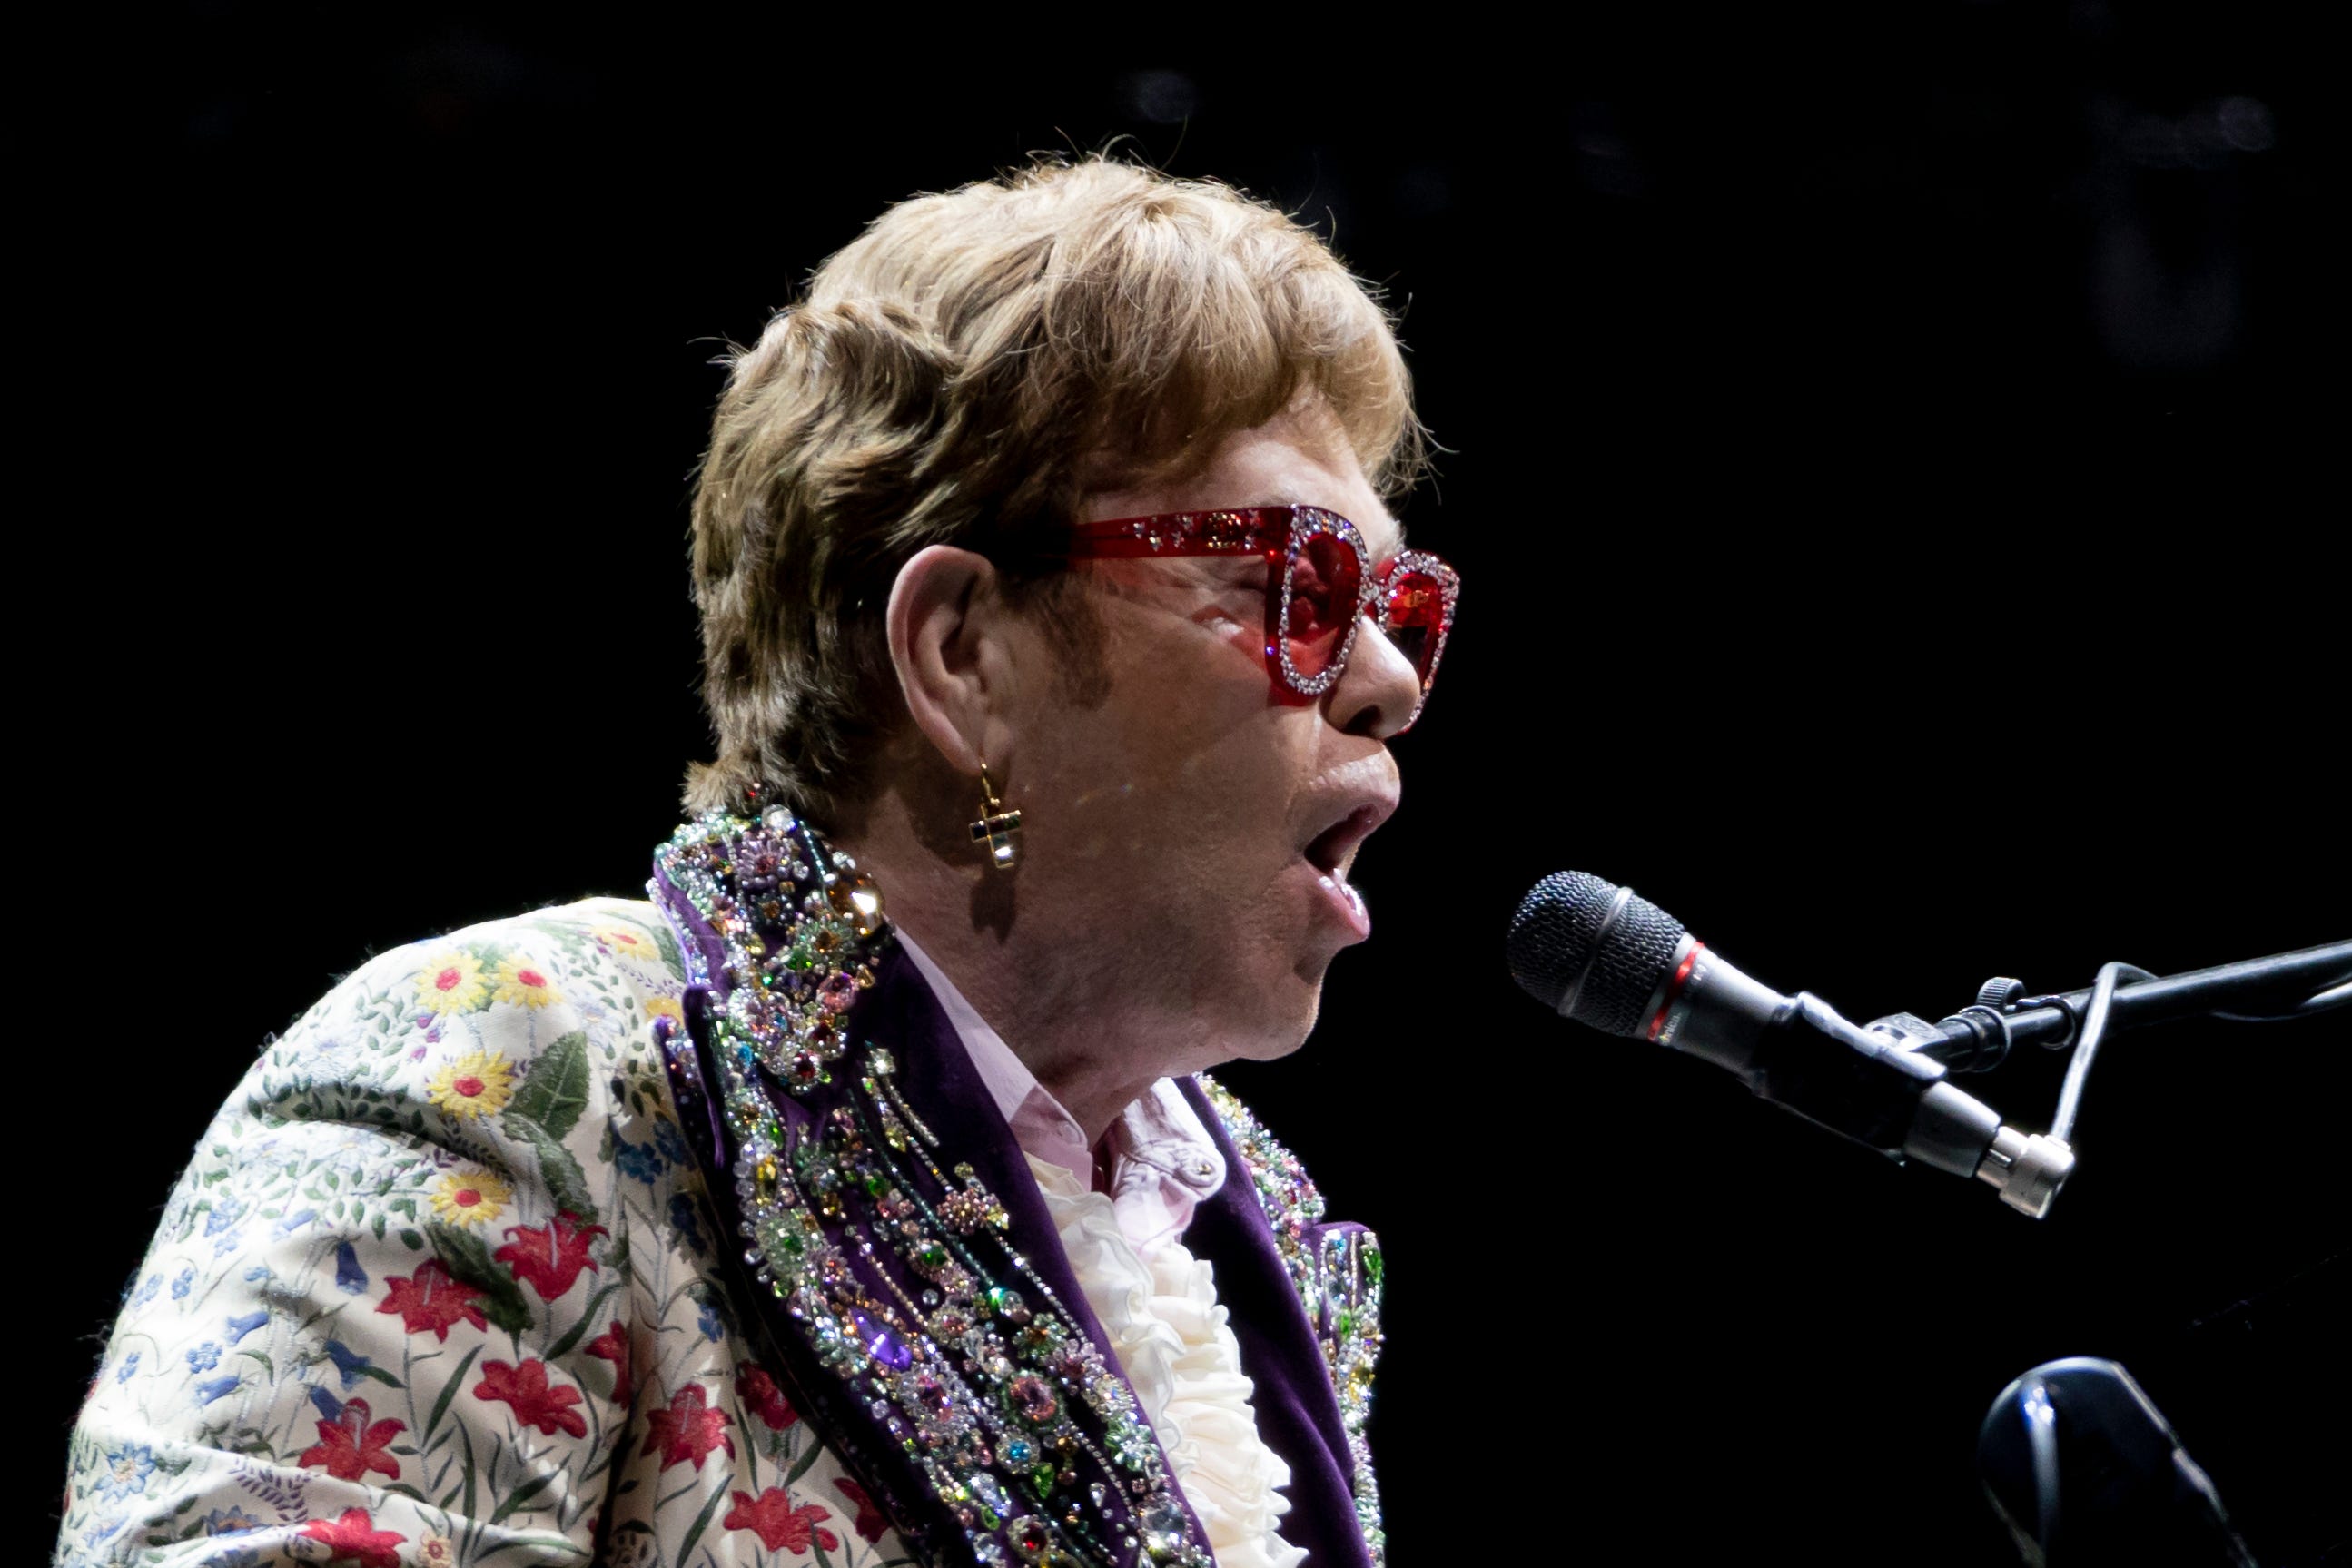 Elton John has COVID-19, cancels shows on farewell tour